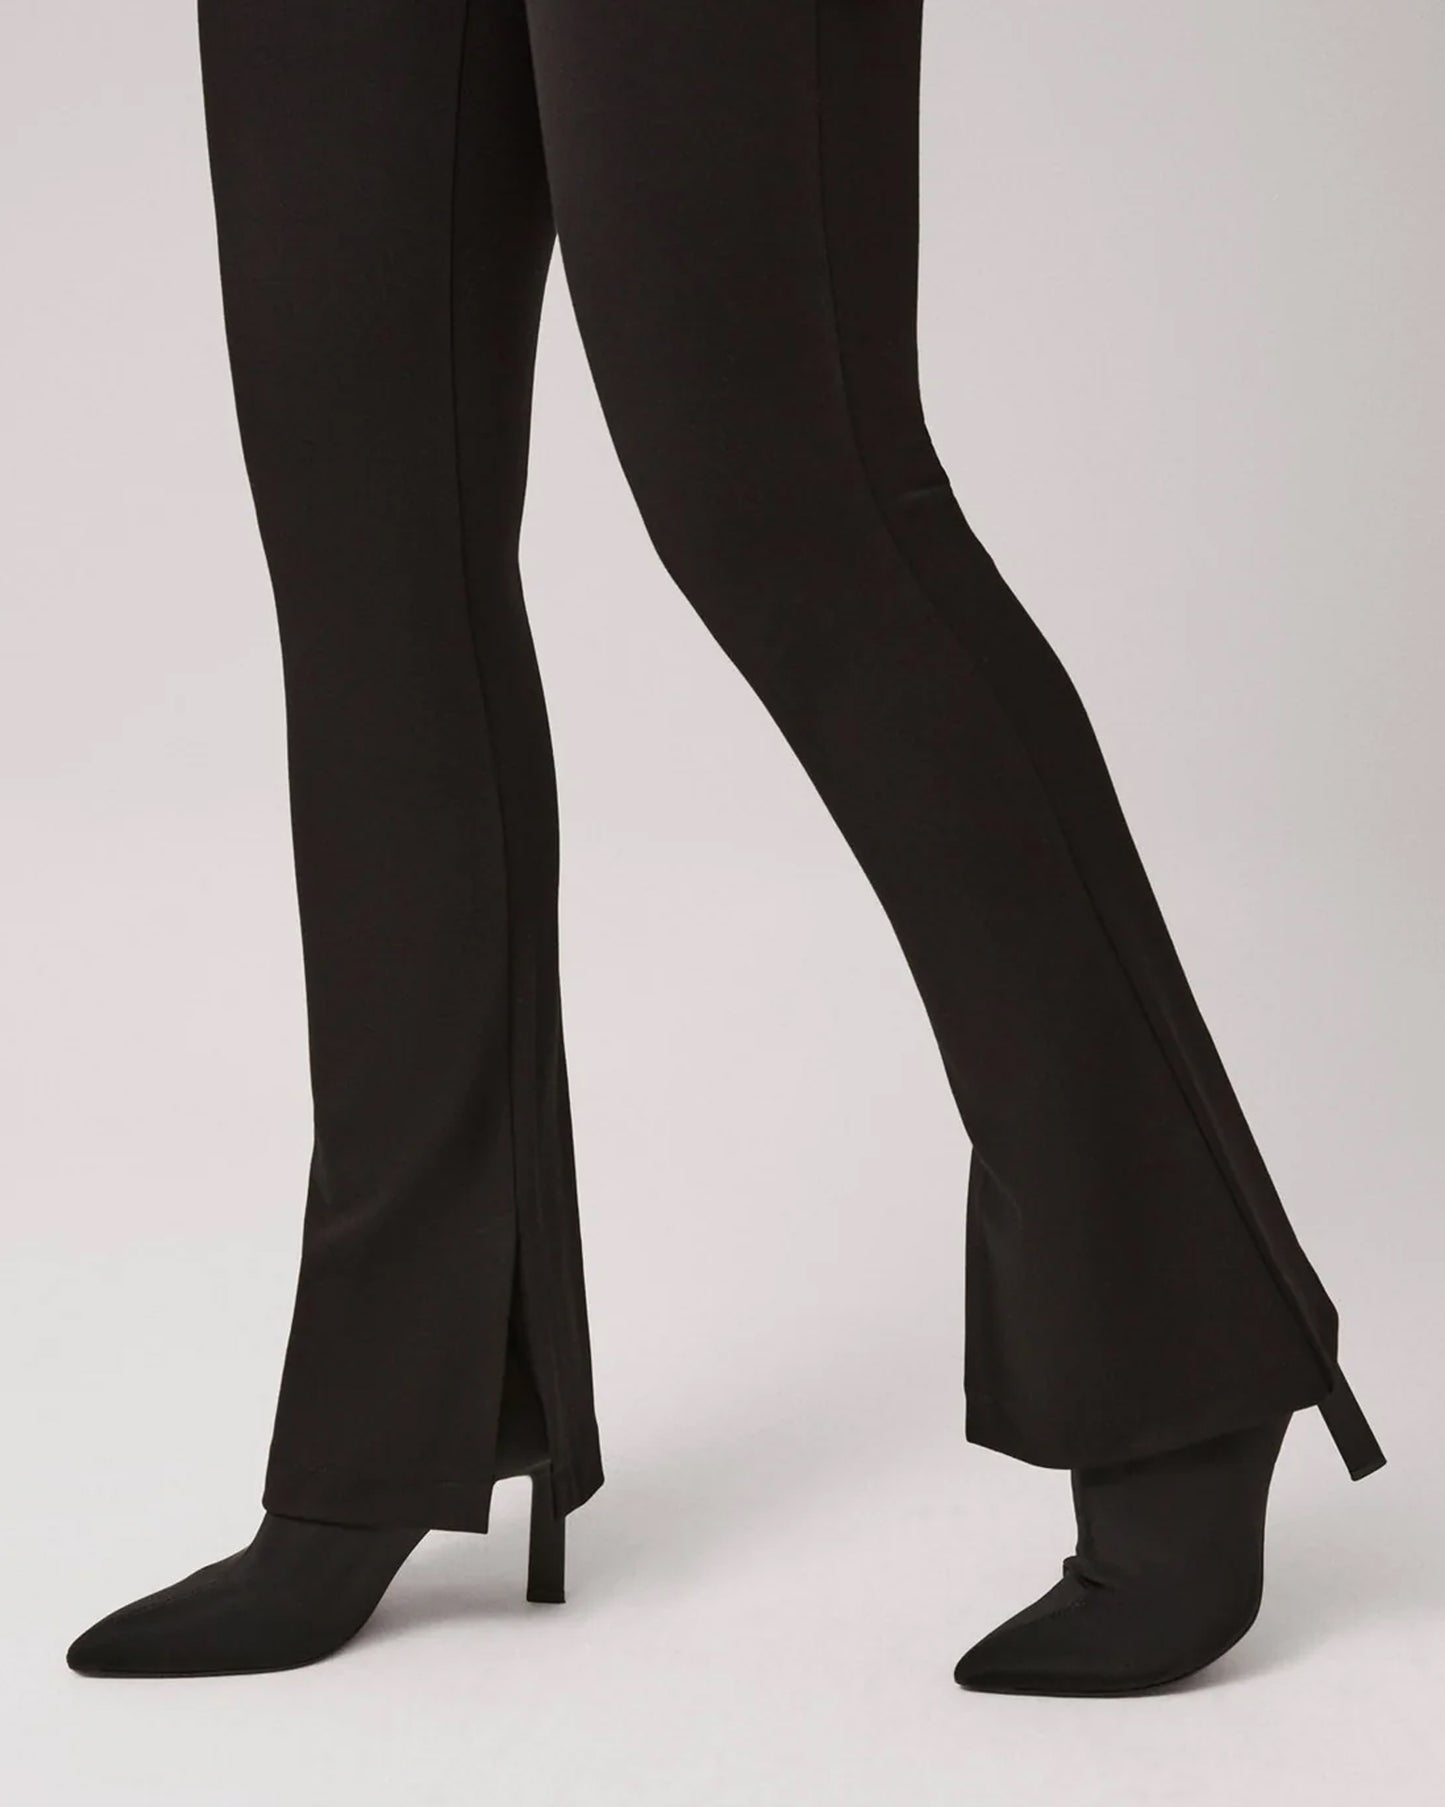 Ysabel Mora 70292 Flare Treggings - Black boot-cut leggings with inside slits at the bottom.